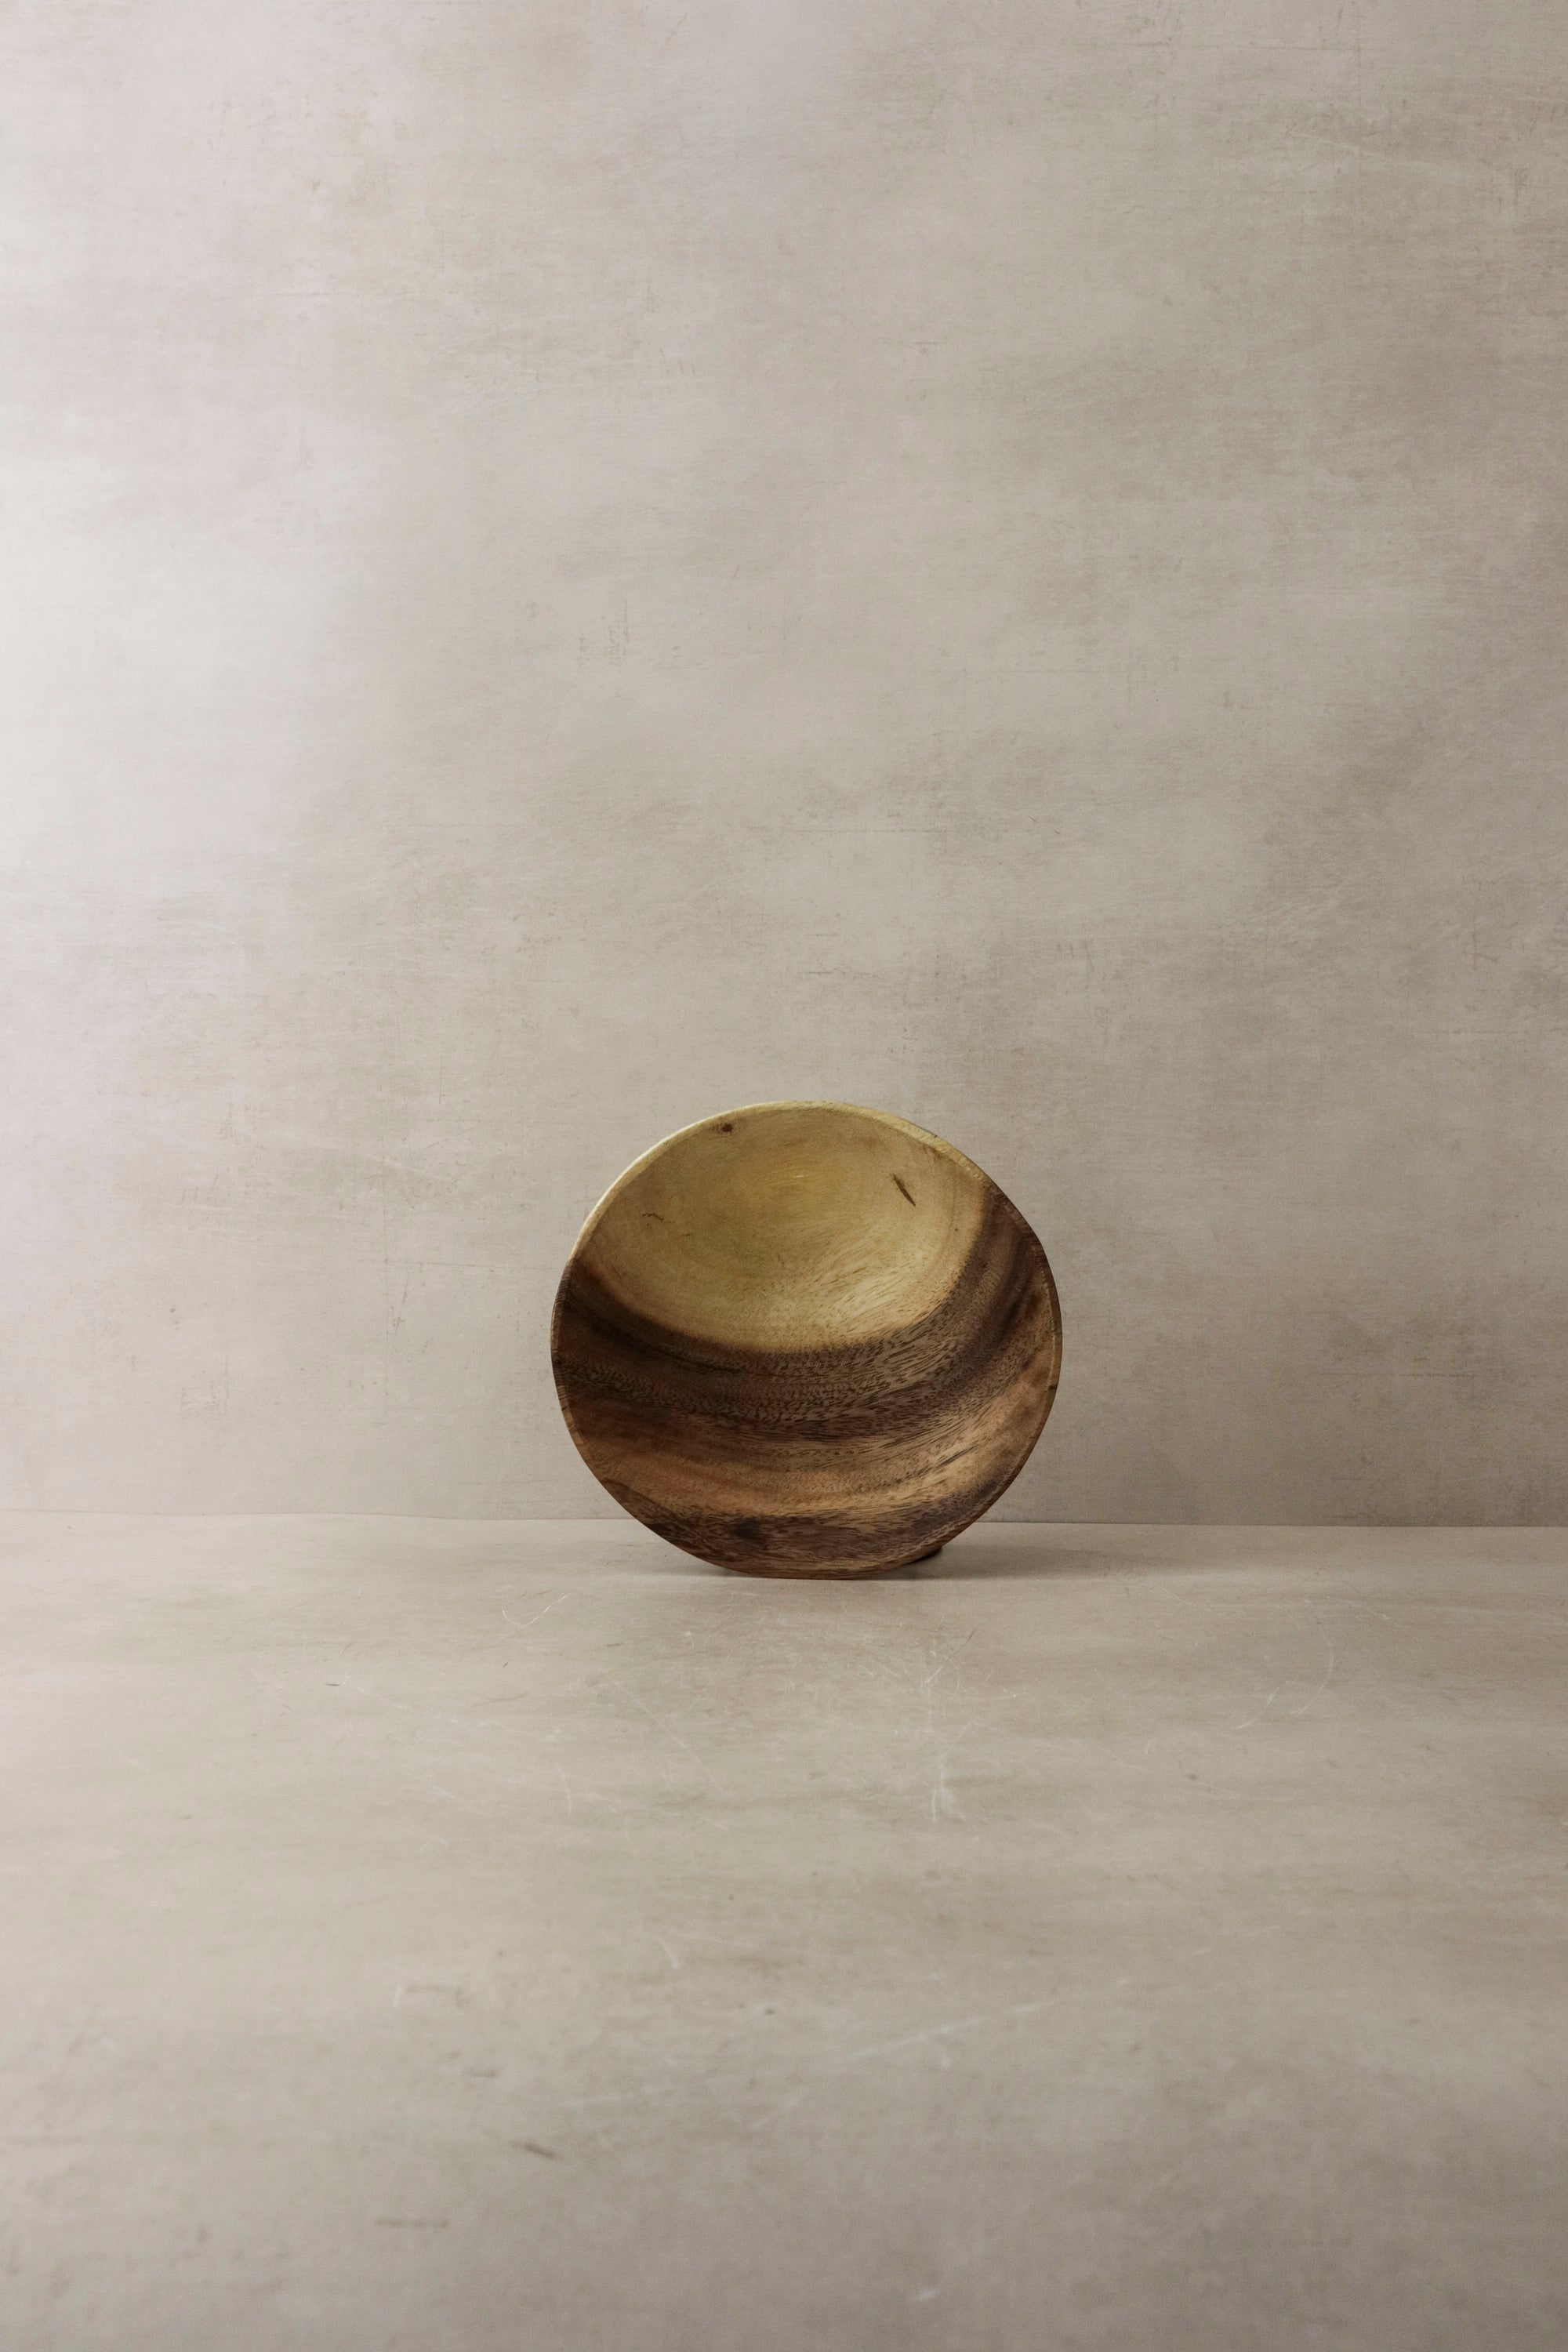 Handmade wooden bowl, Zimbabwe - 12.1